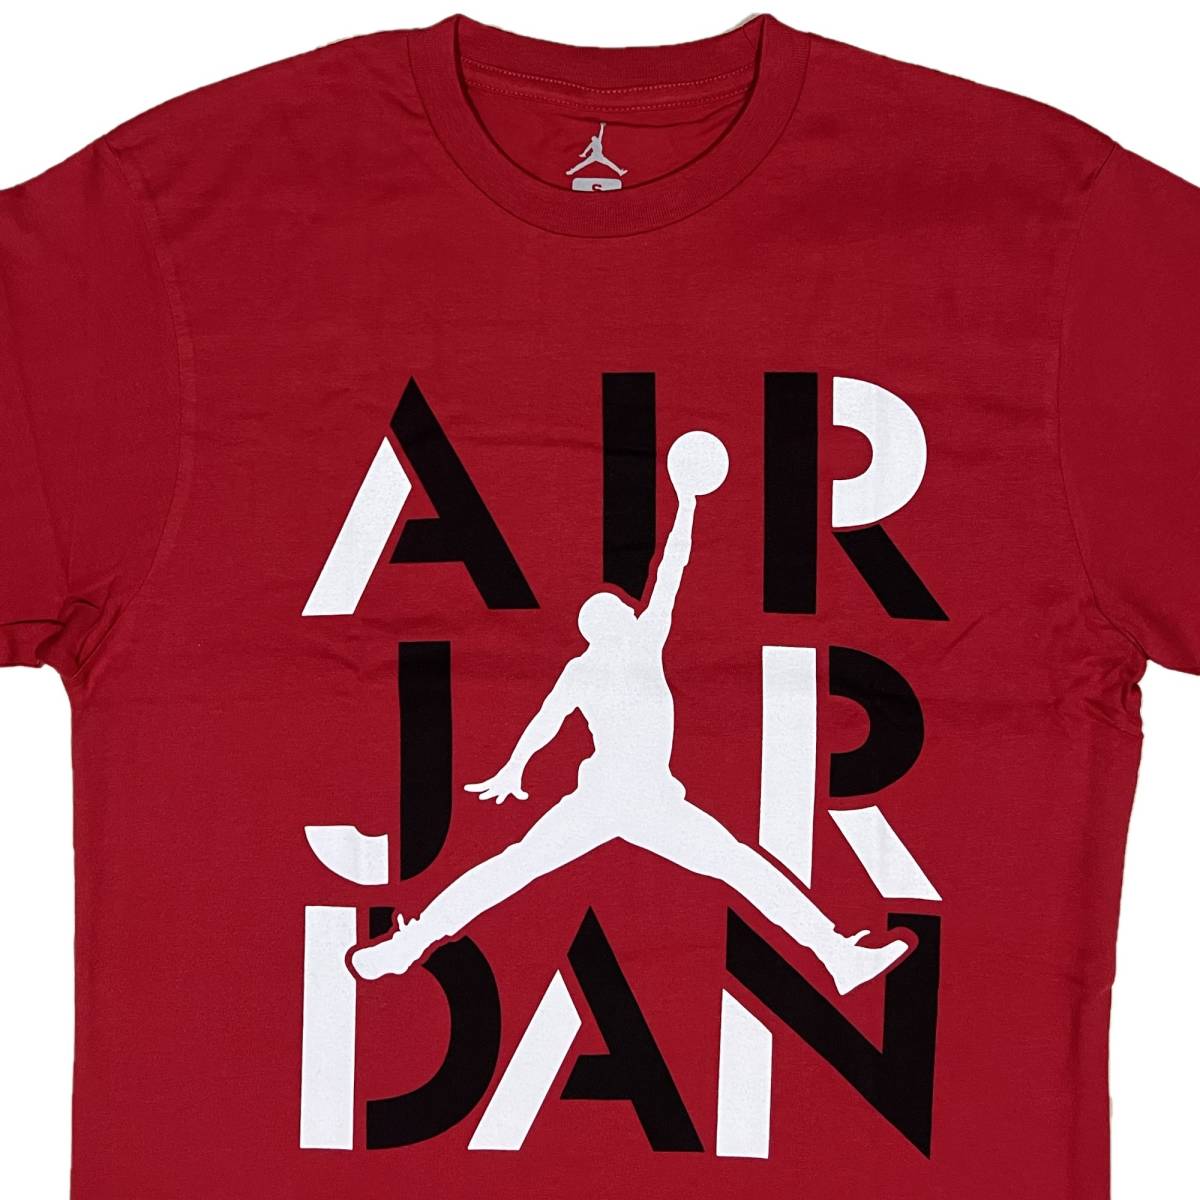 Nike Air Jordan ナイキ エア ジョーダン 5 Jumpman ジャンプマン Stencil ステンシル Tシャツ 659158-687 (レッド) (L) [並行輸入品]